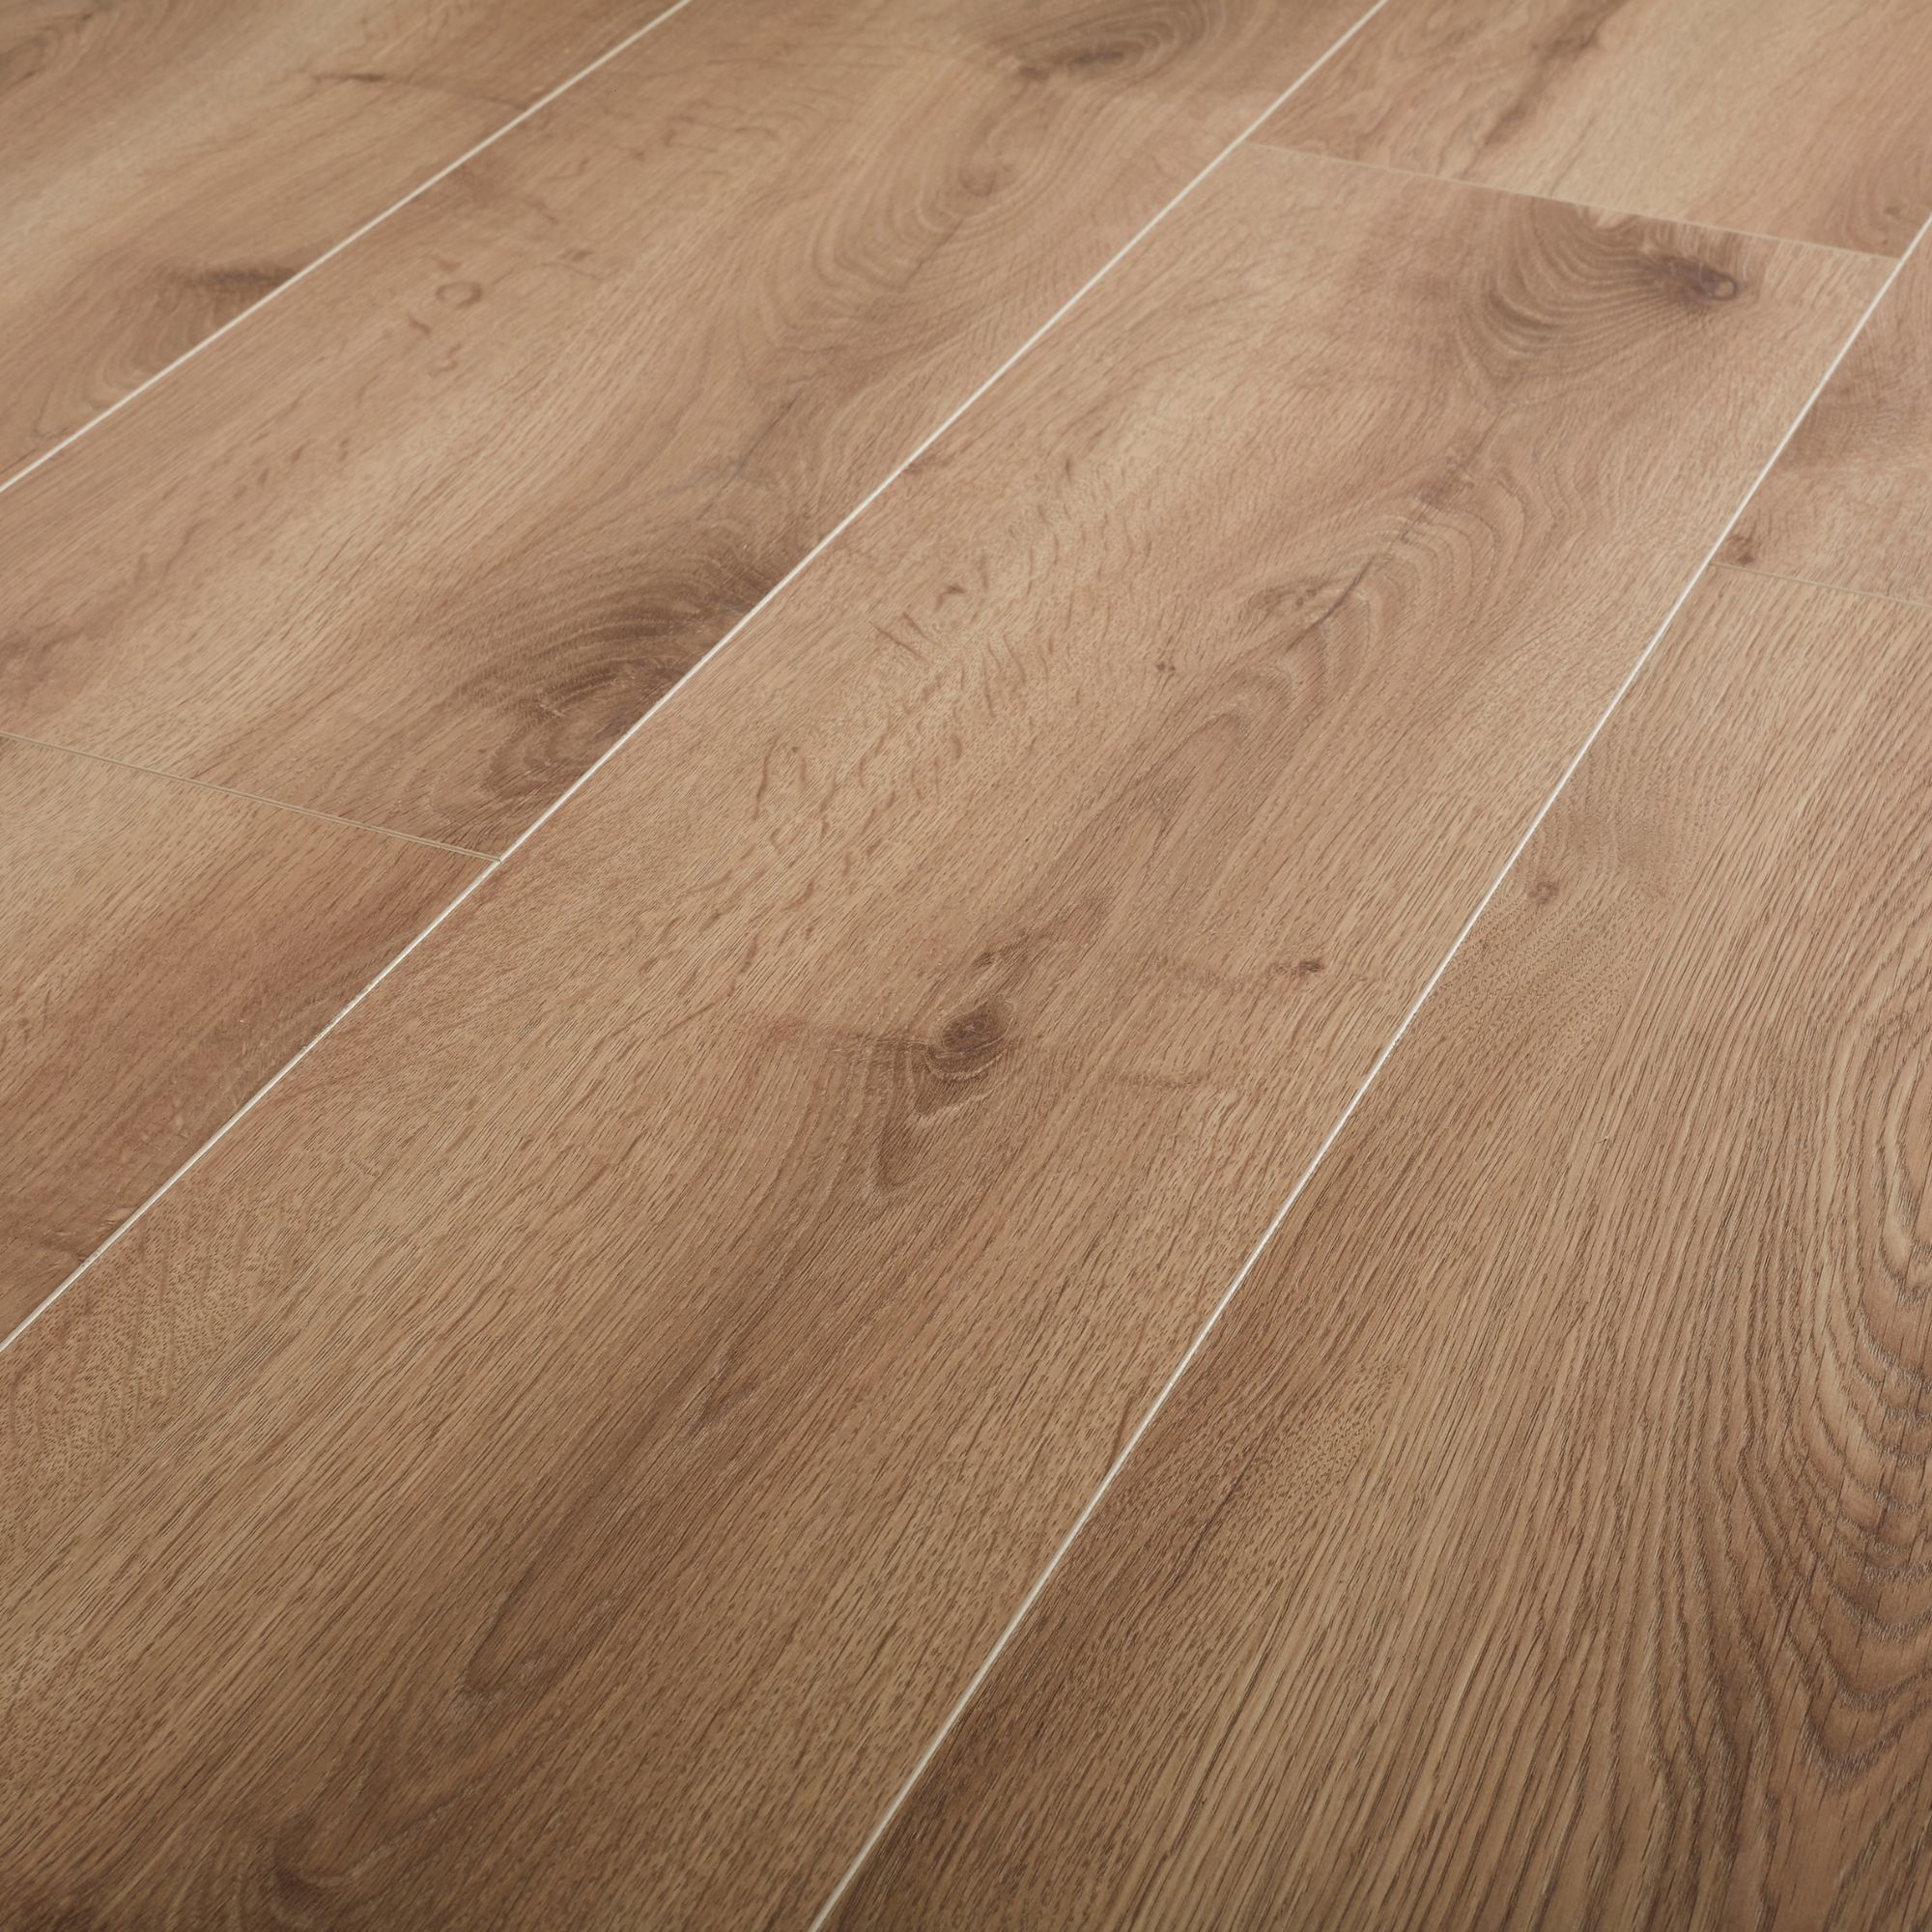 Goodhome Masham Natural Oak Effect Laminate Flooring 1 55m Pack